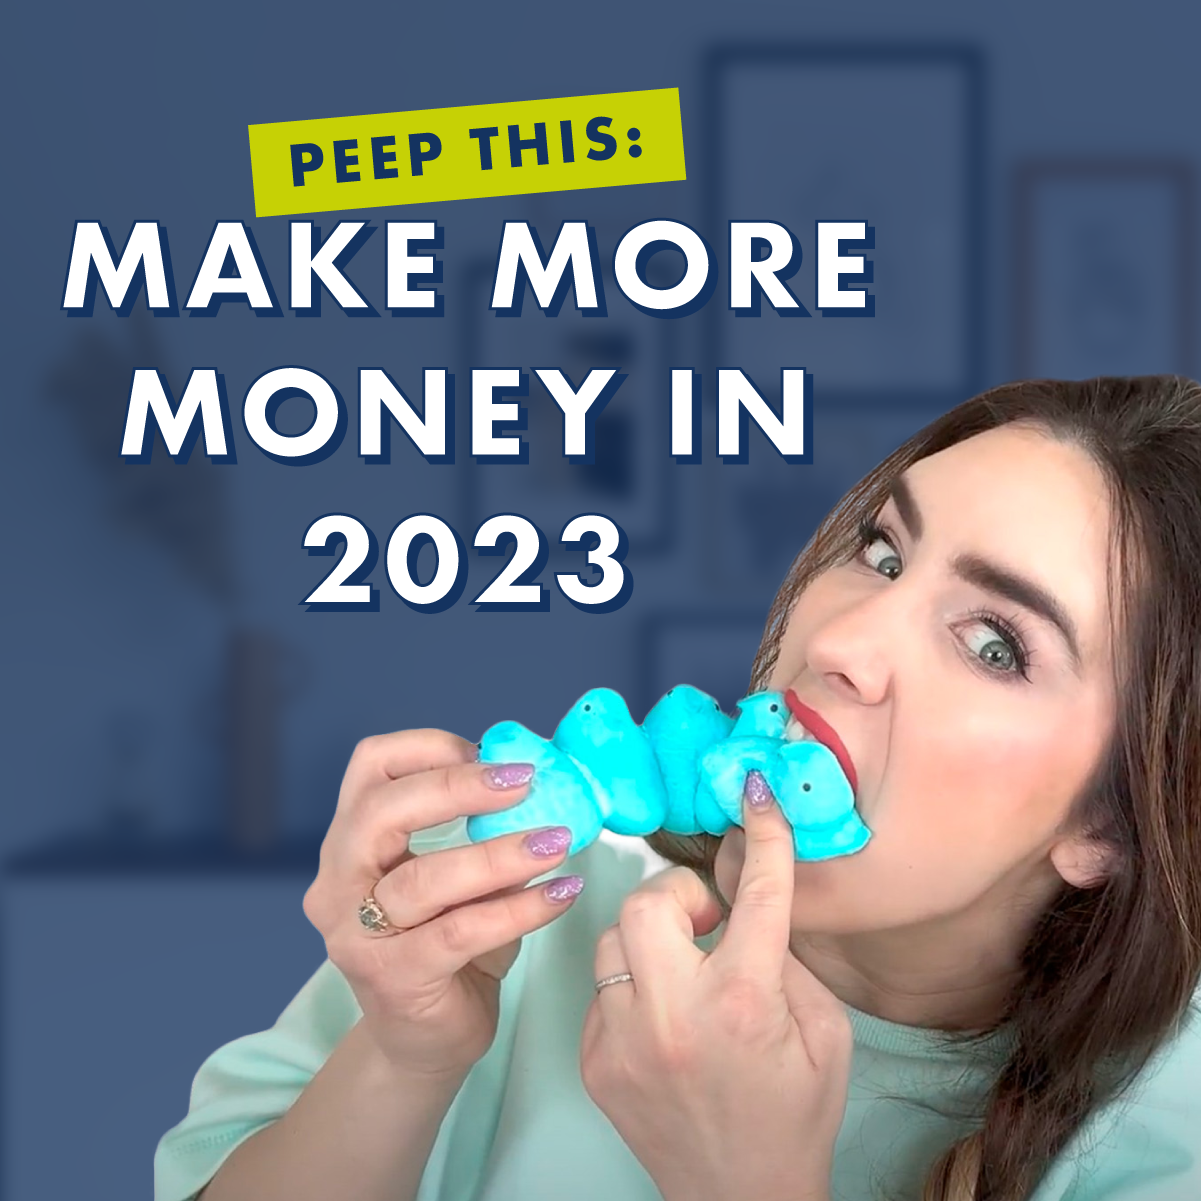 Make more money in 2023